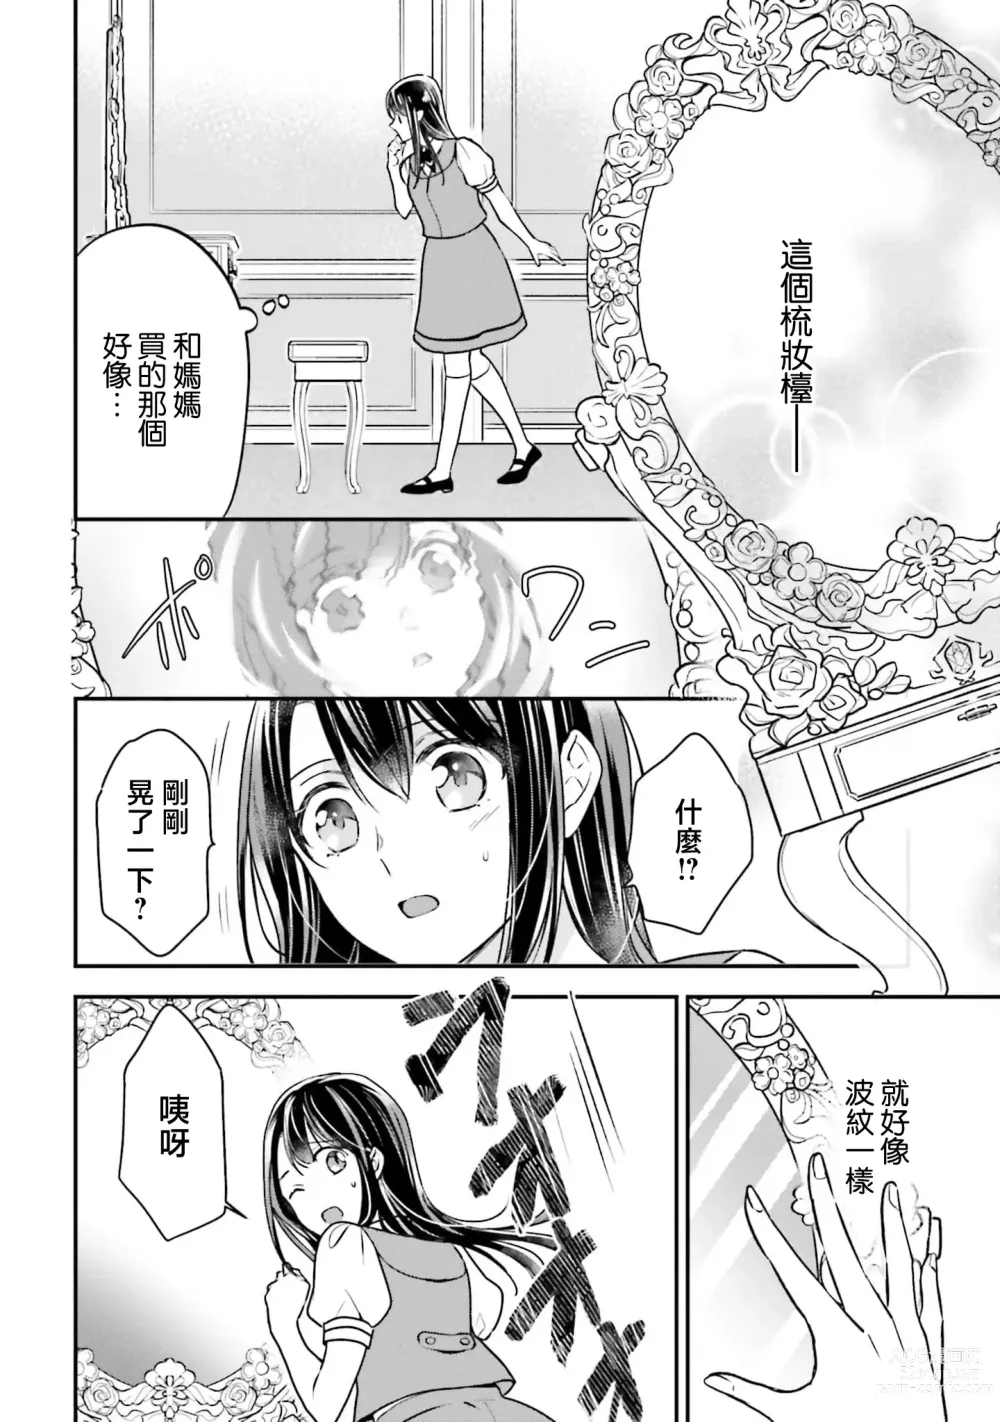 Page 10 of manga 在异世界成为了替身公主被霸王掳走了 1-6